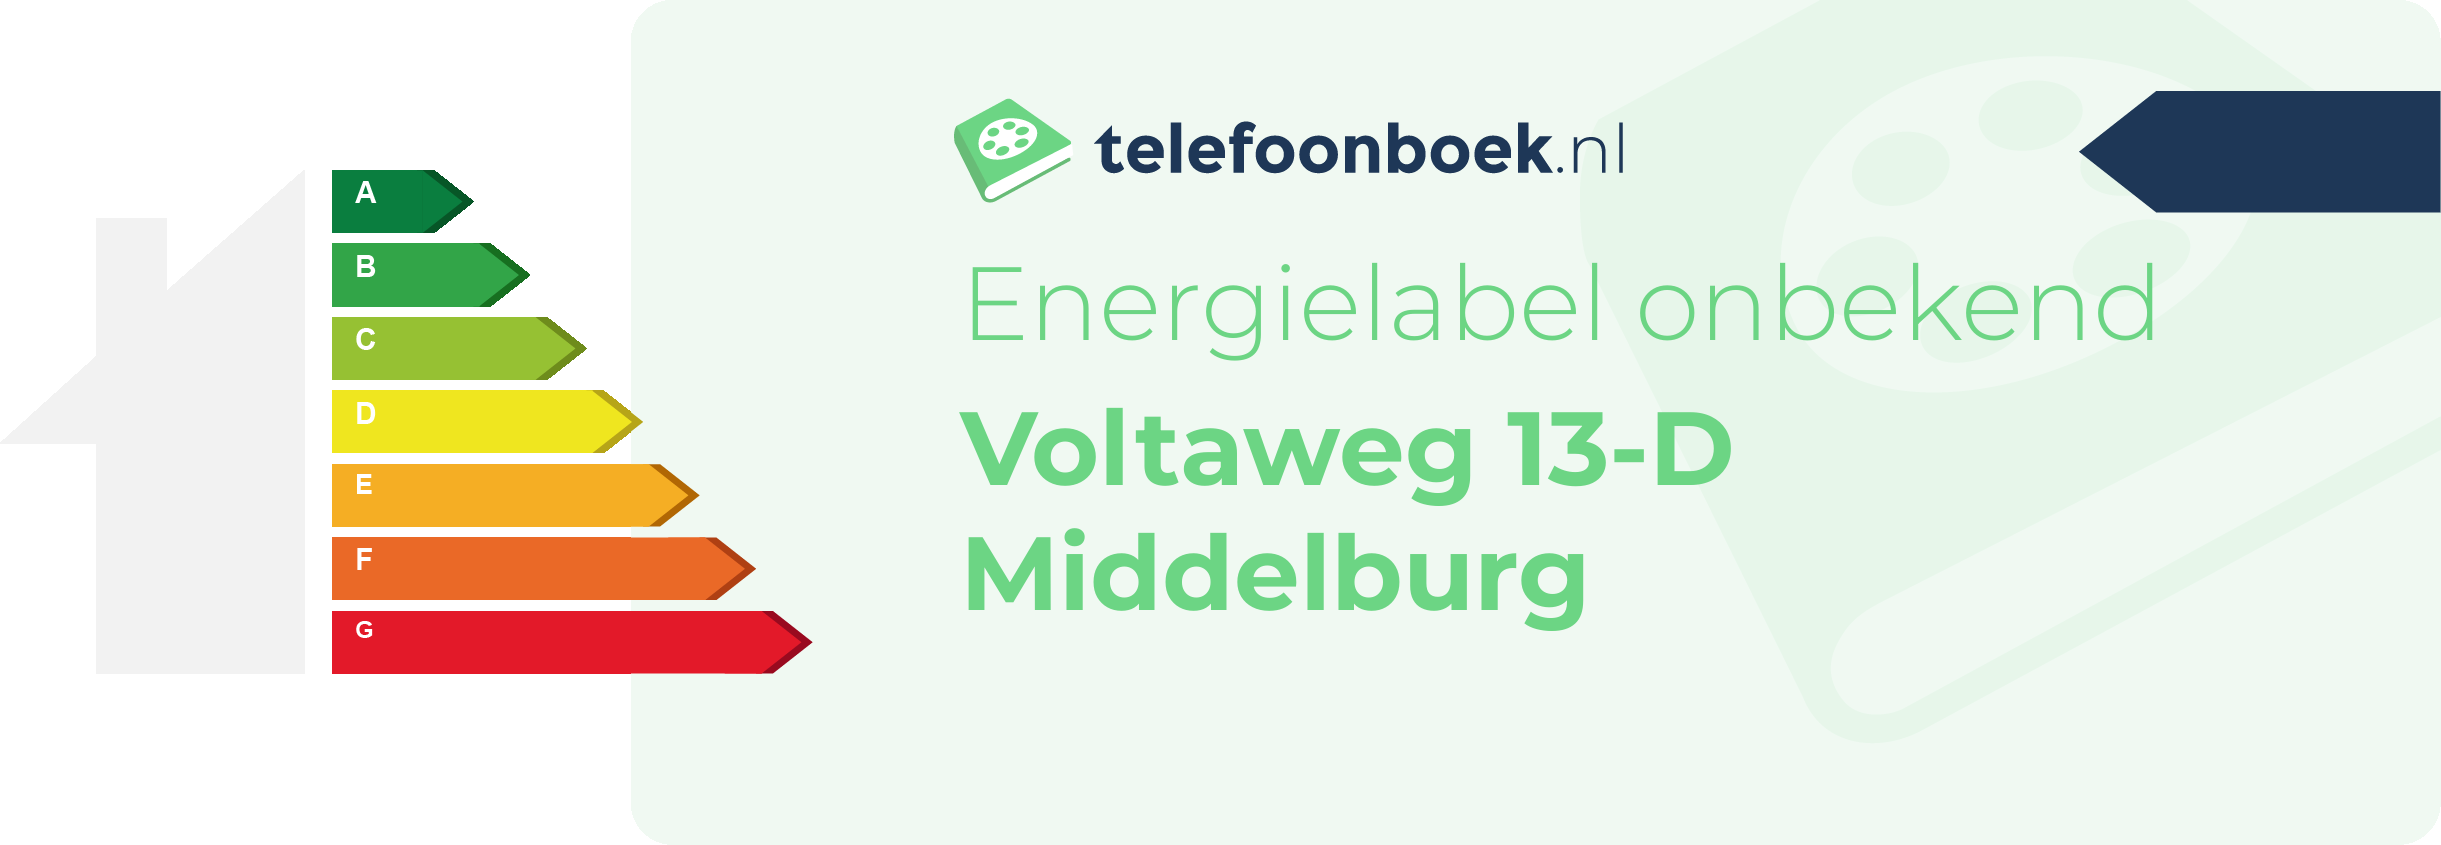 Energielabel Voltaweg 13-D Middelburg